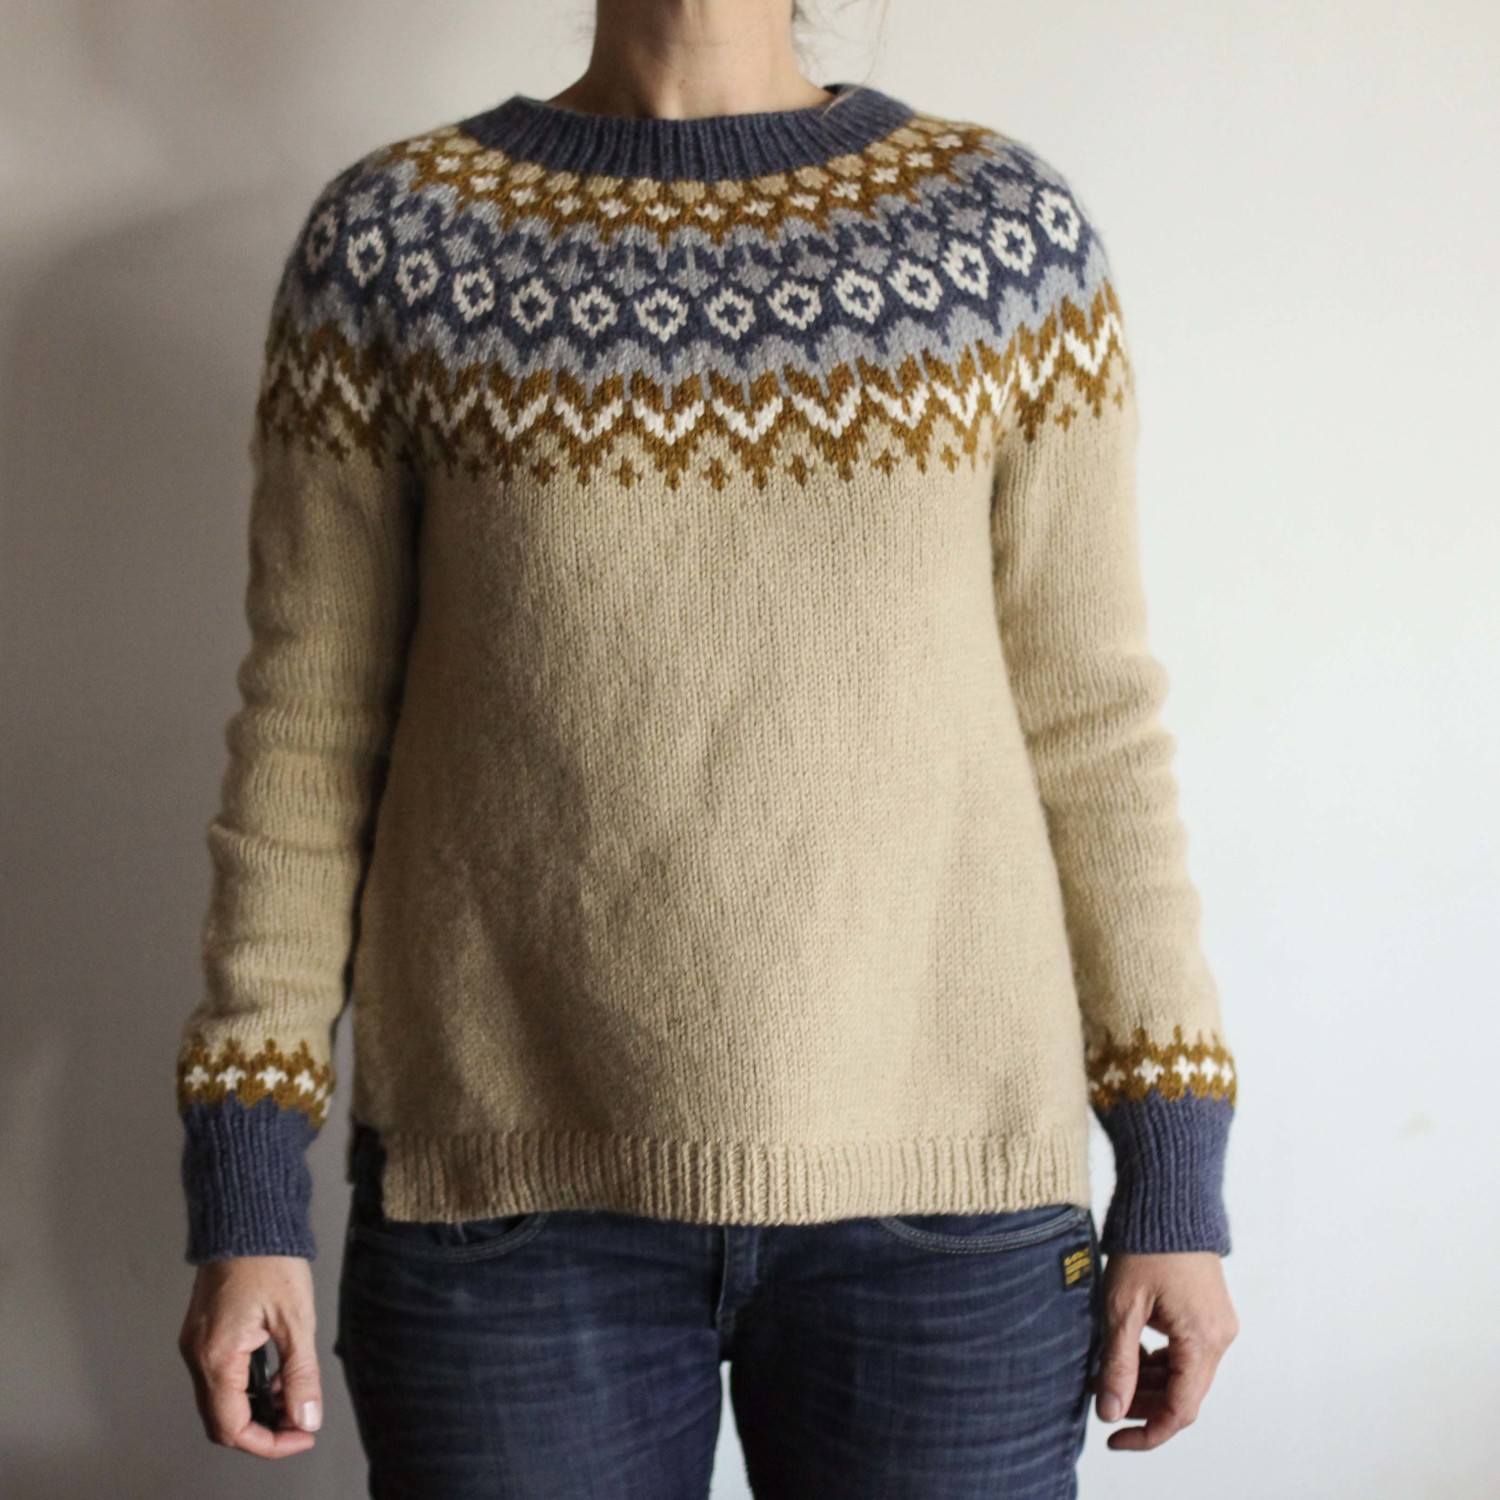 My Latest Freestyle Sweater - Riddari! The Craft